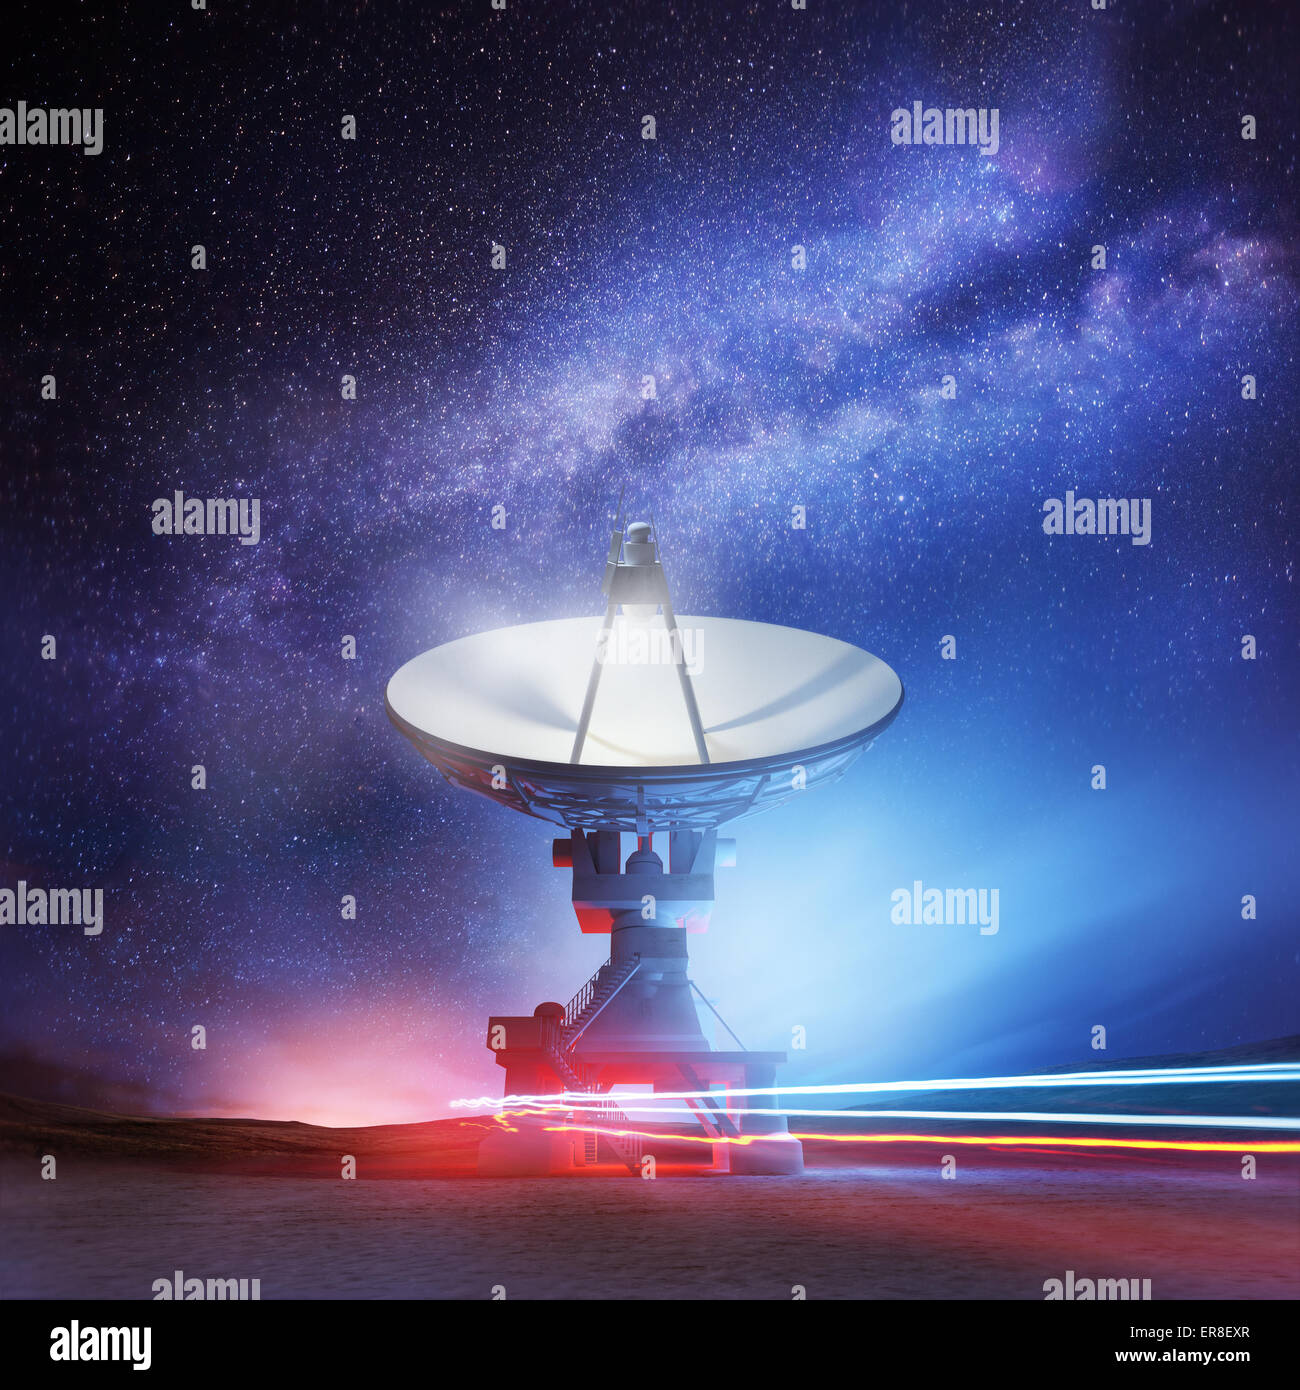 A radio telescope pointing upwards into the night sky. Astronomy background. Illustration. Stock Photo